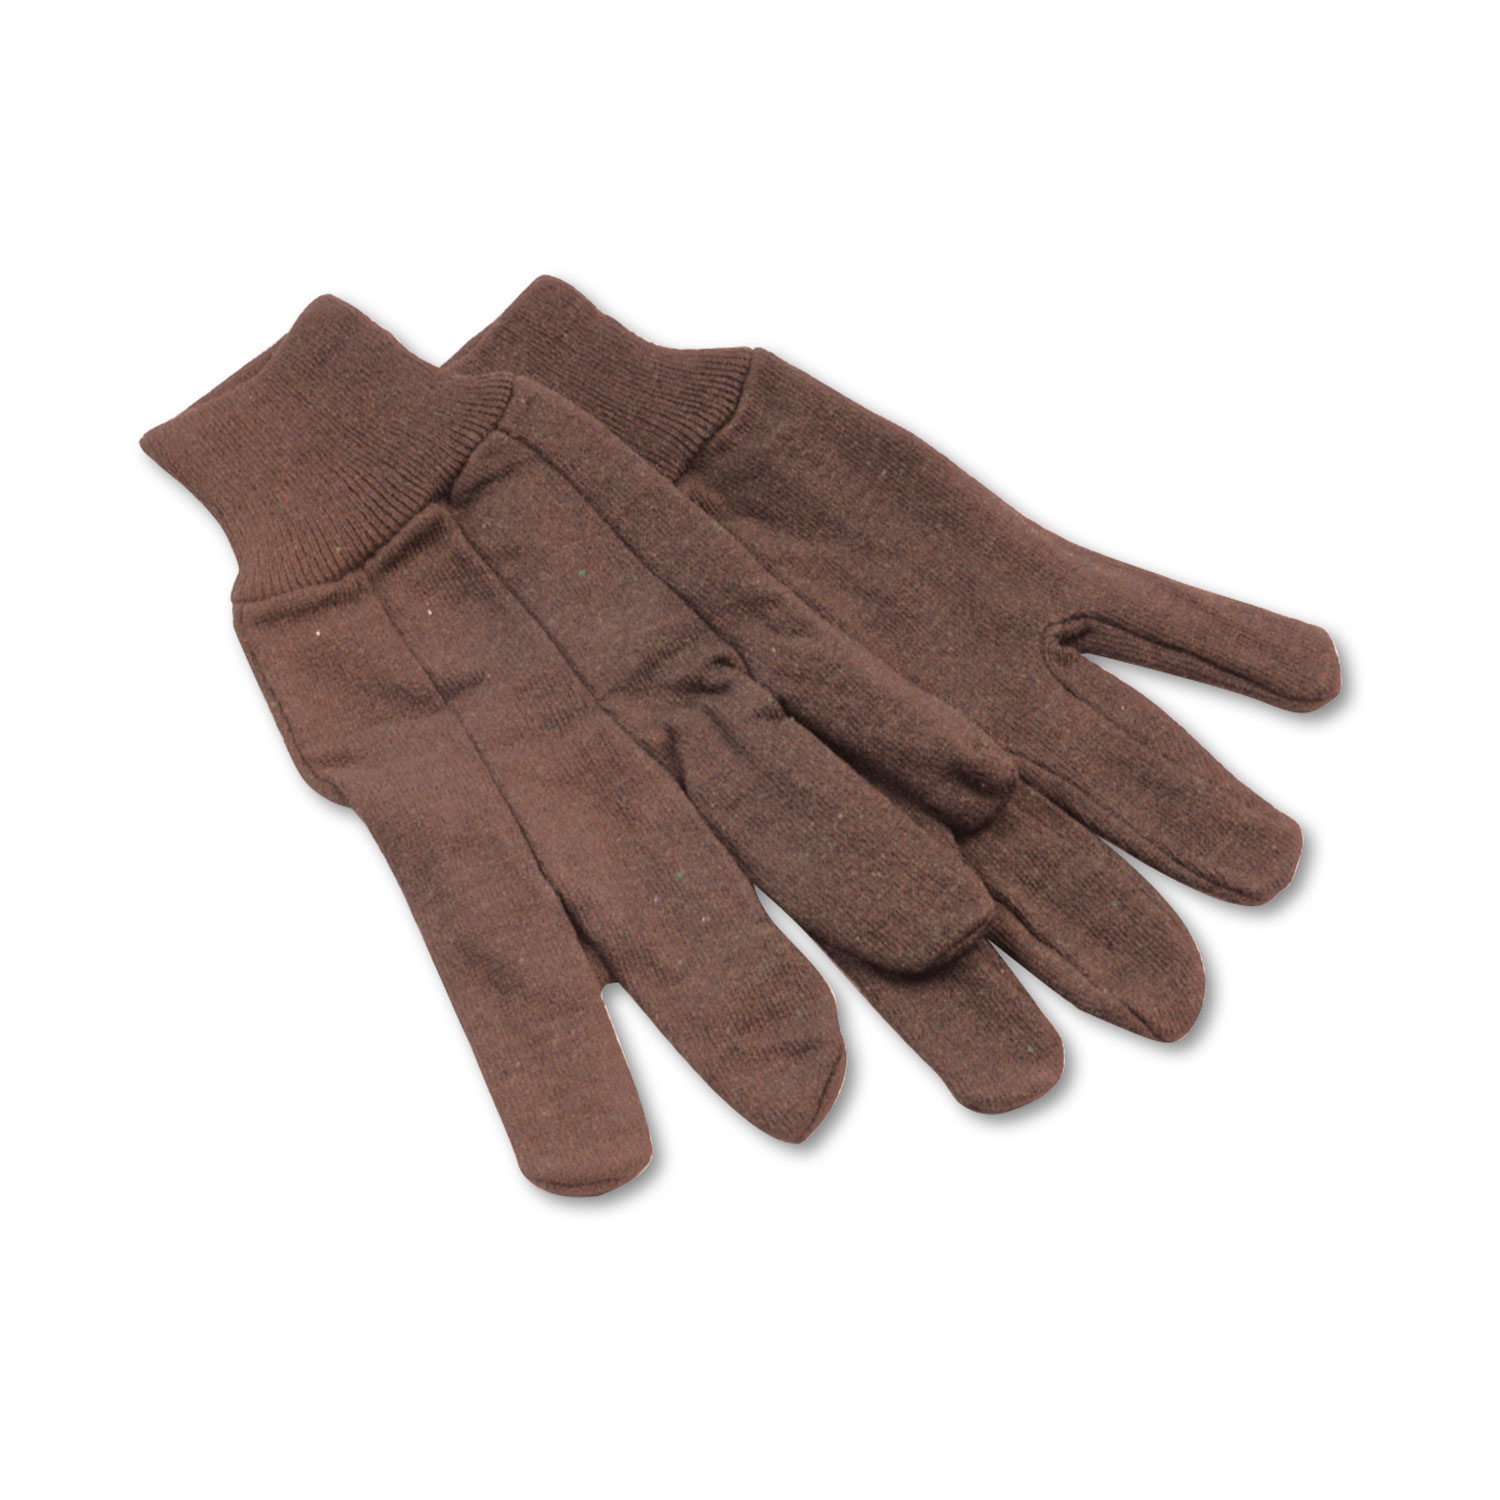  Boardwalk BWK9 Jersey Knit Wrist Clute Gloves, One Size Fits Most, Brown, 12 Pairs (BWK9) 